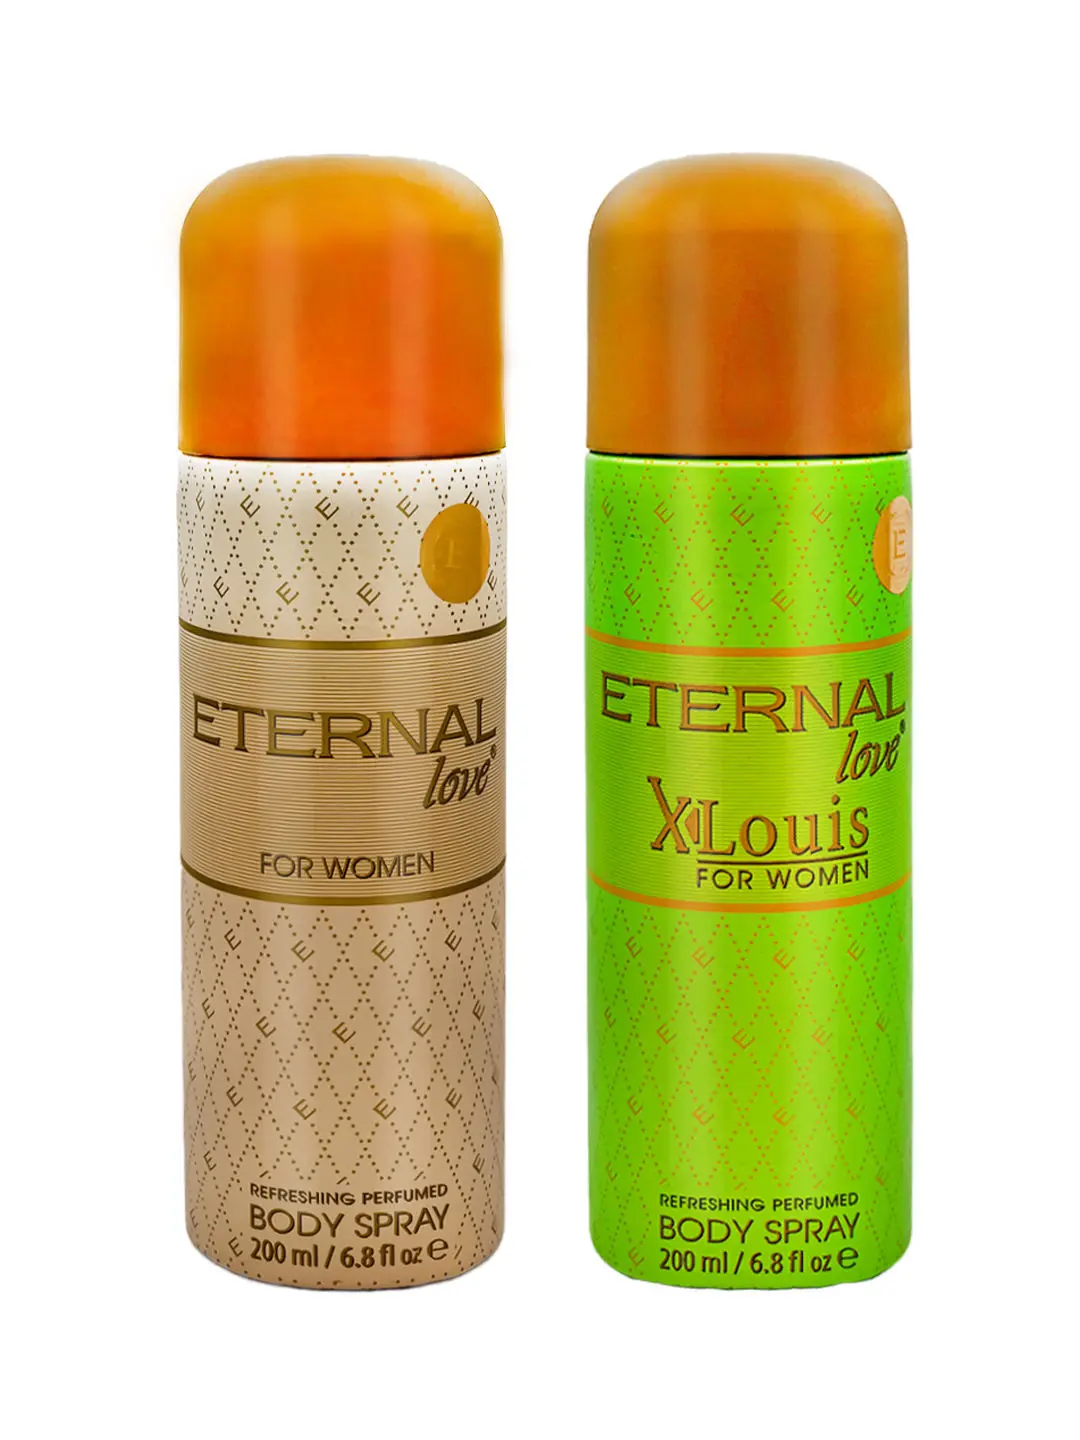 ETERNAL Love for Women Deodorant Perfumed Bodyspray, 200ml & X-Louis for Women Deodorant Perfumed Bodyspray, 200ml